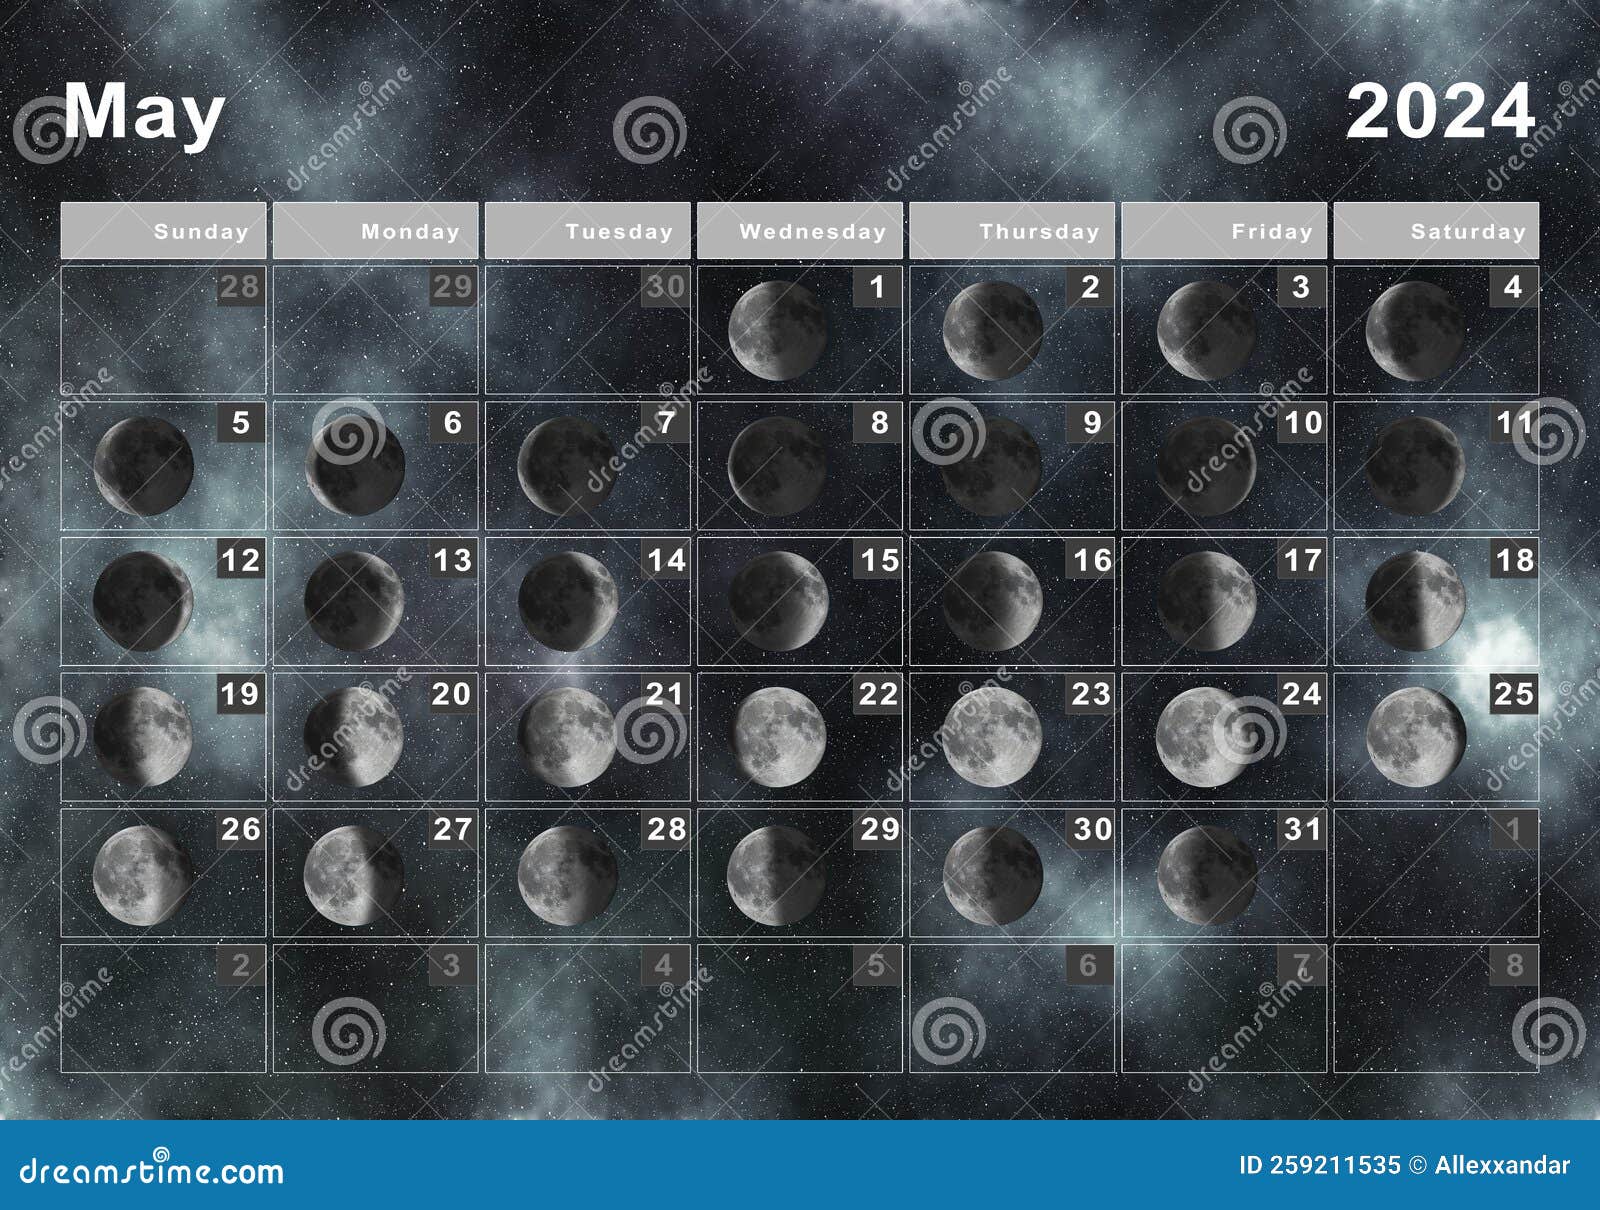 May 2024 Lunar Calendar 2024 CALENDAR PRINTABLE